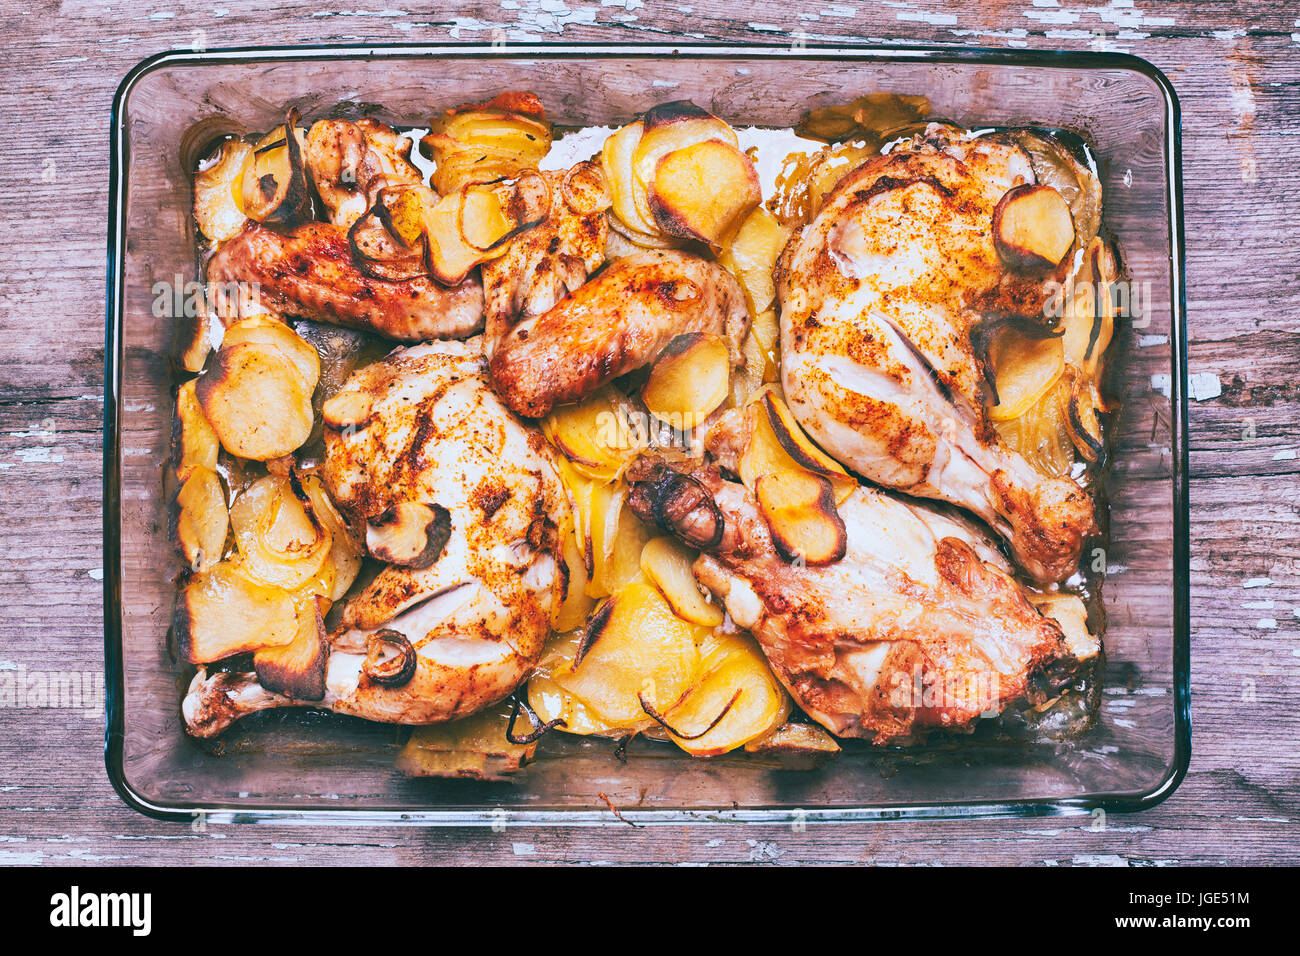 Potato and chicken casserole in baking dish Stock Photo